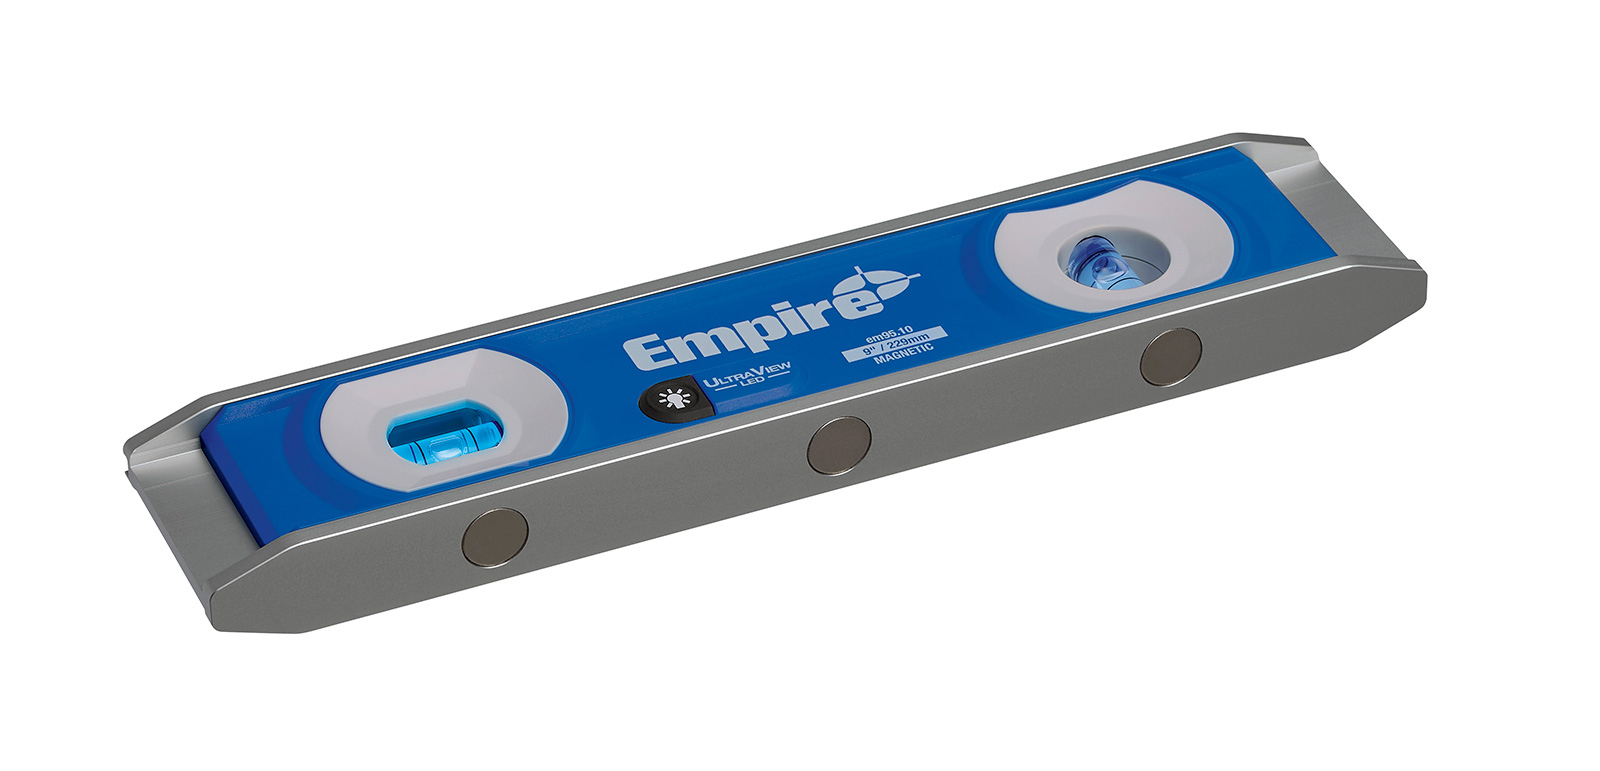 Empire E95.48 48 UltraView LED Box Level New